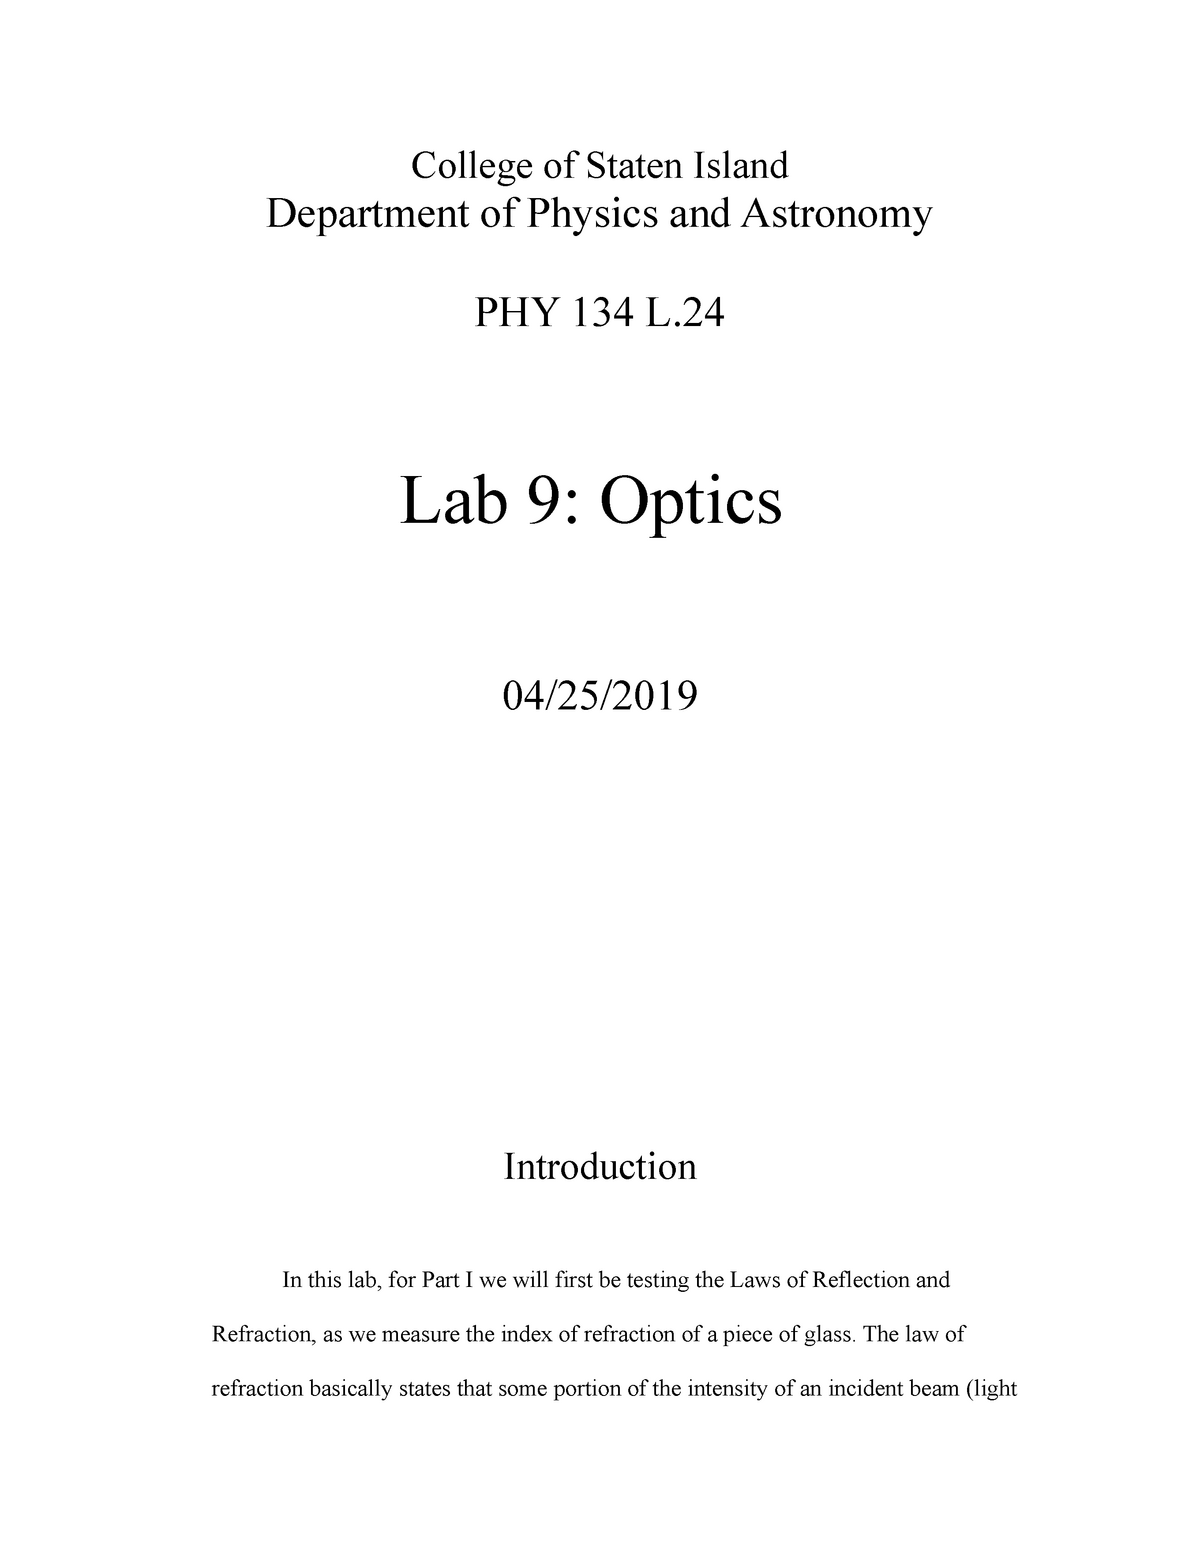 Phy 134 lab 9 lab 9 optics College of Staten Island Department of